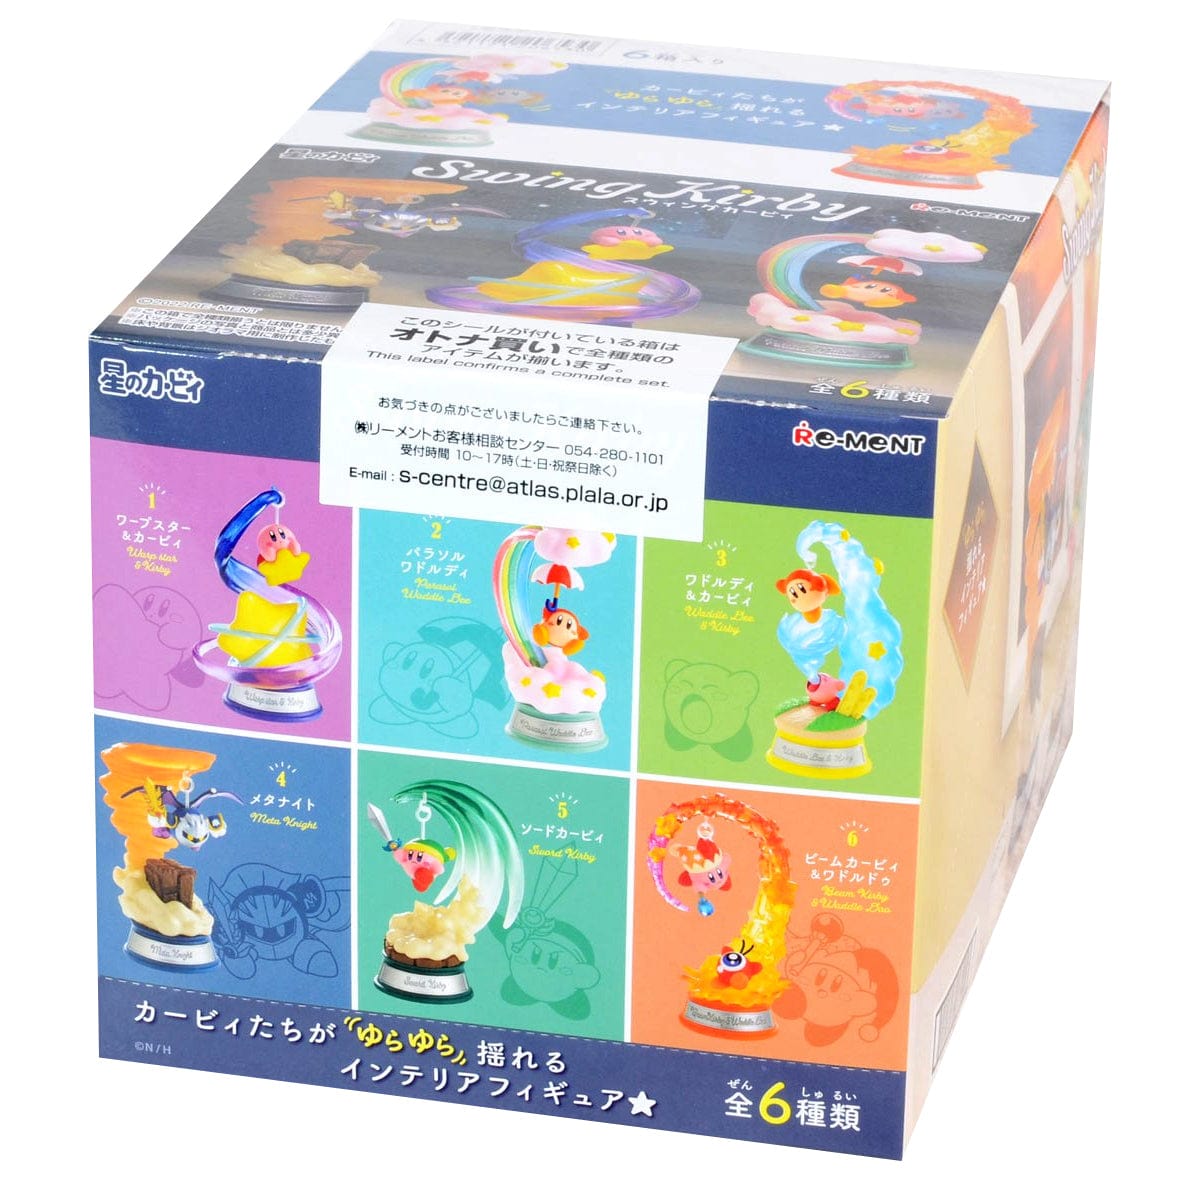 JBK Rement Kirby's Dream Land Swing Kirby Surprise Box Kawaii Gifts 4521121206530